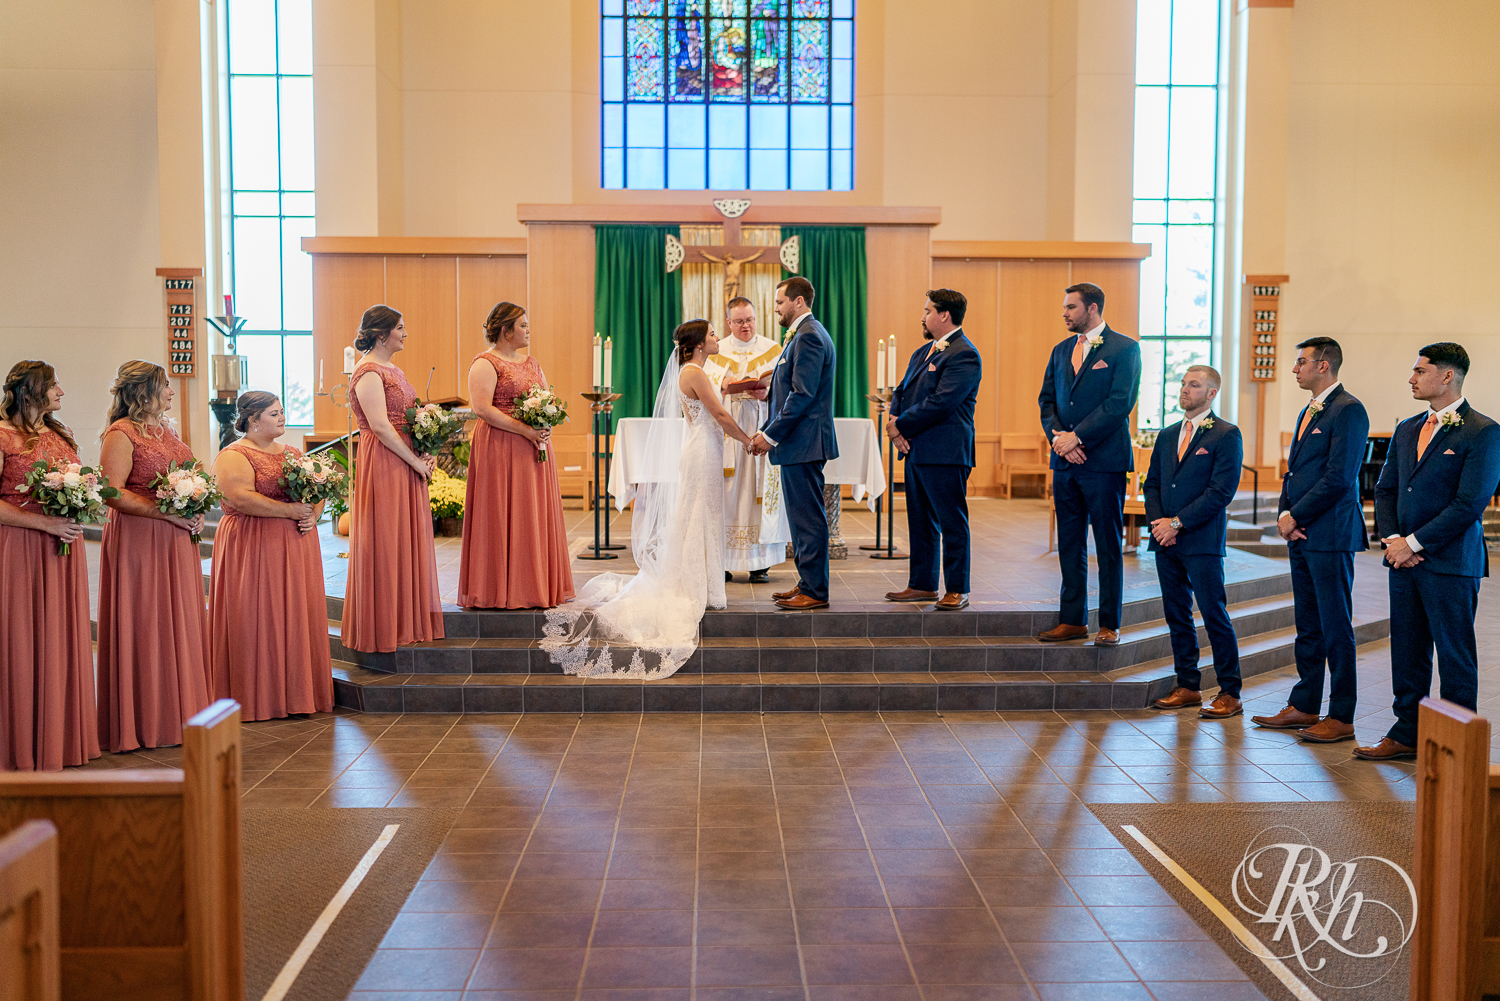 Catholic wedding ceremony at Saint Joseph Catholic Church in Rosemount, Minnesota.